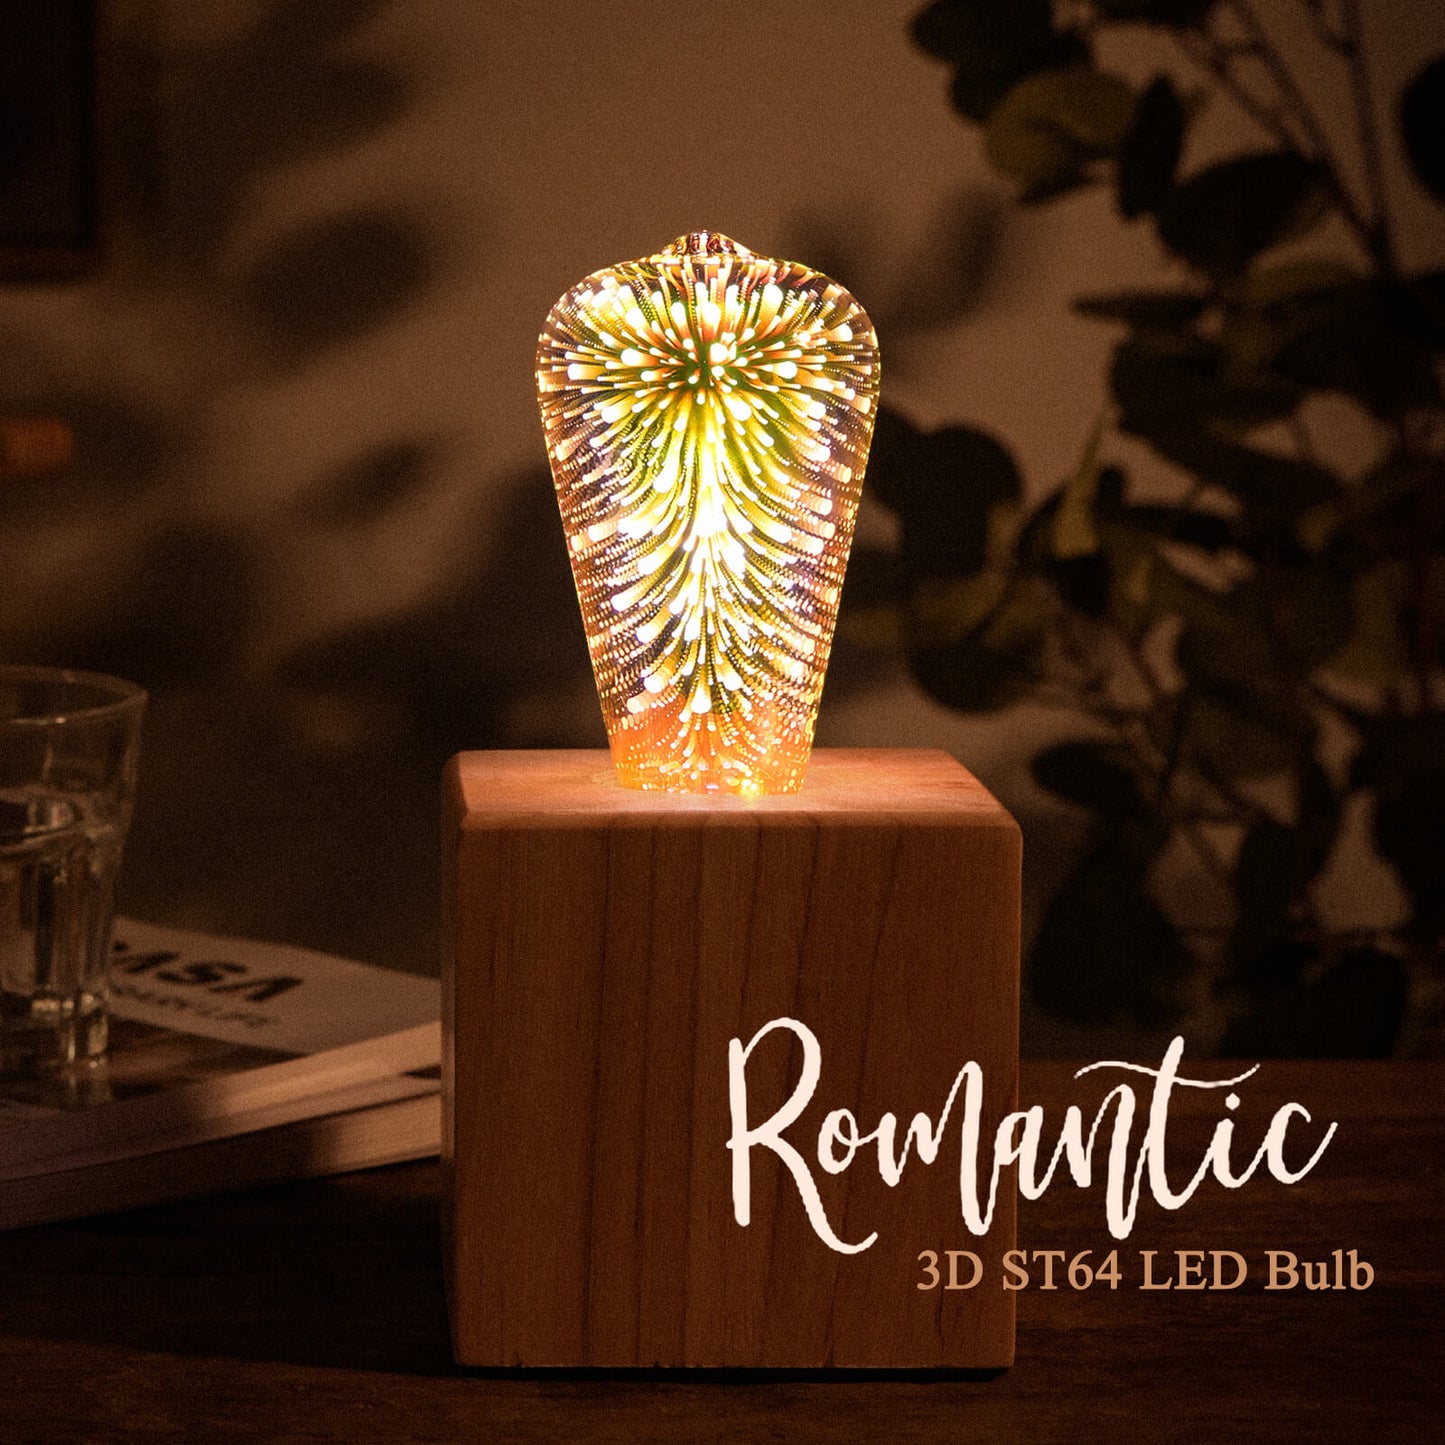 Porseme 3D Fireworks Decorative Light Bulb, E26 Base, 4W, AC100-240V, Glass bulbs with Soft Warm Light, Shiny Decor for Home, Bedroom, Party (Included 3-Pack ST64 Bulbs)